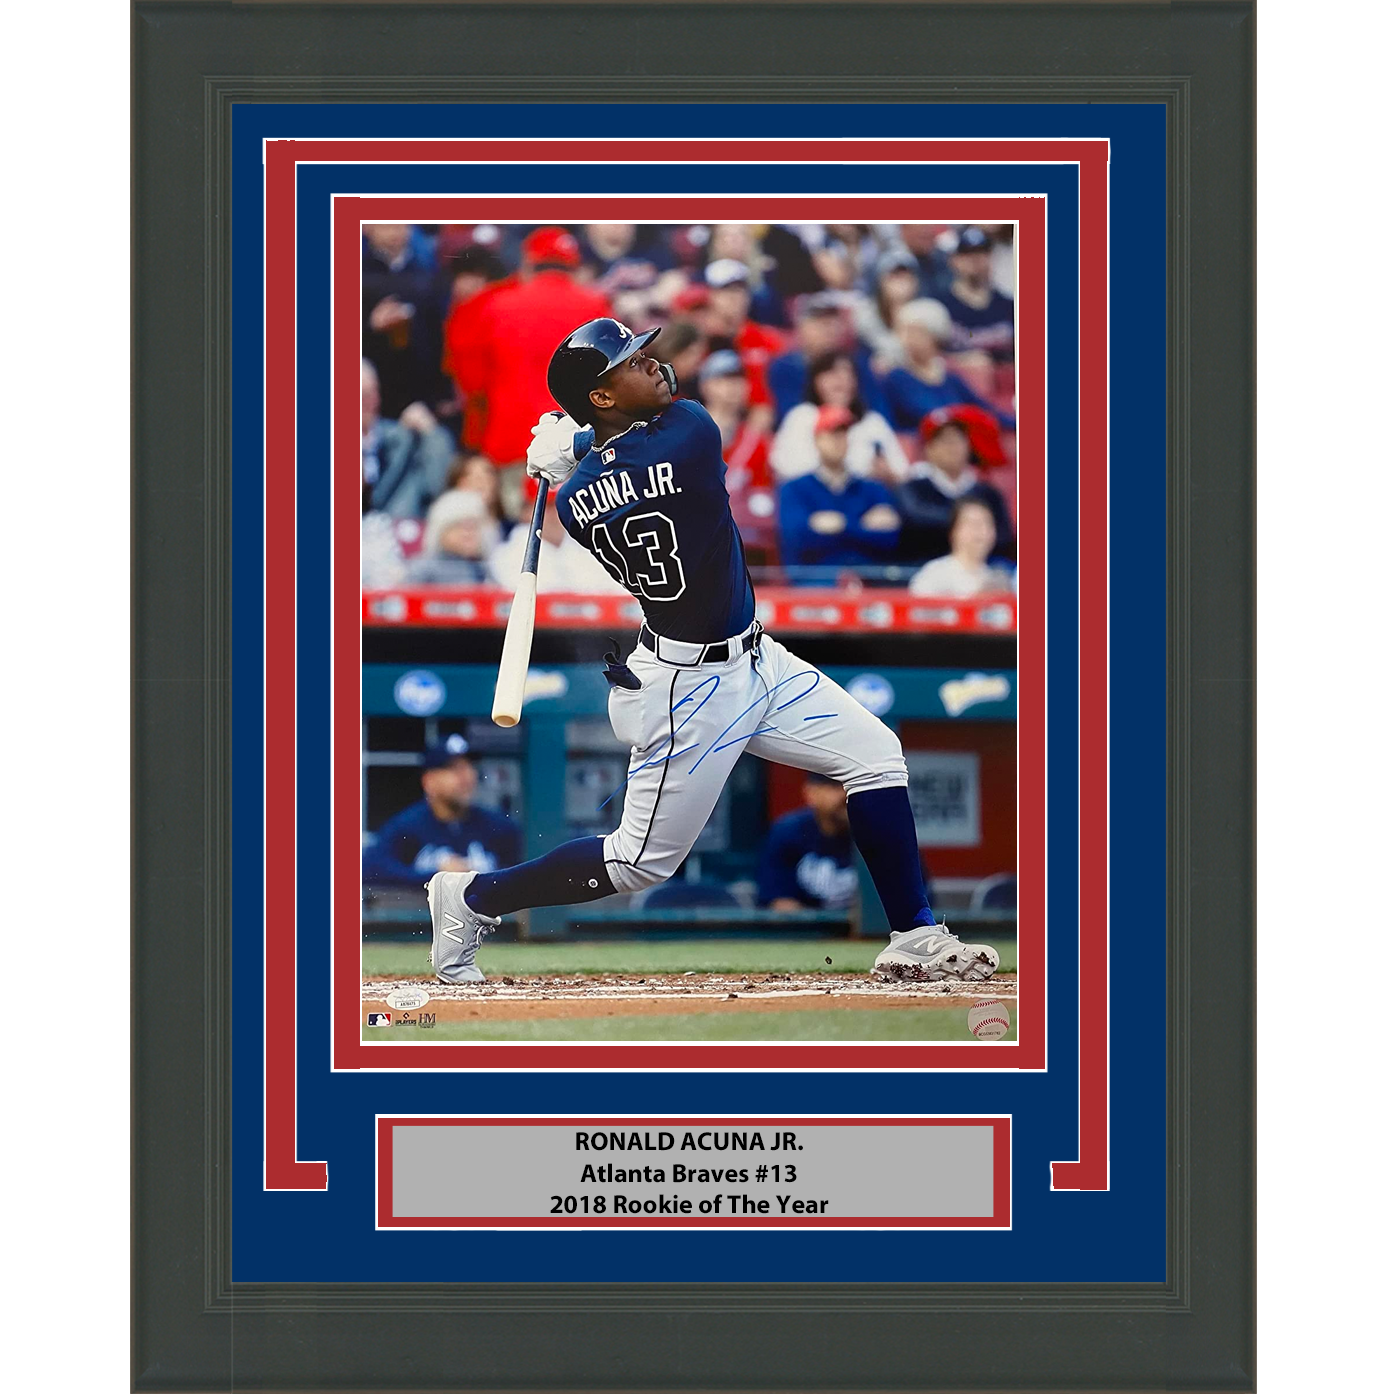 Framed Autographed/Signed Ronald Acuna Jr. Atlanta Braves 16x20 Baseball  Photo JSA COA #1 - Hall of Fame Sports Memorabilia